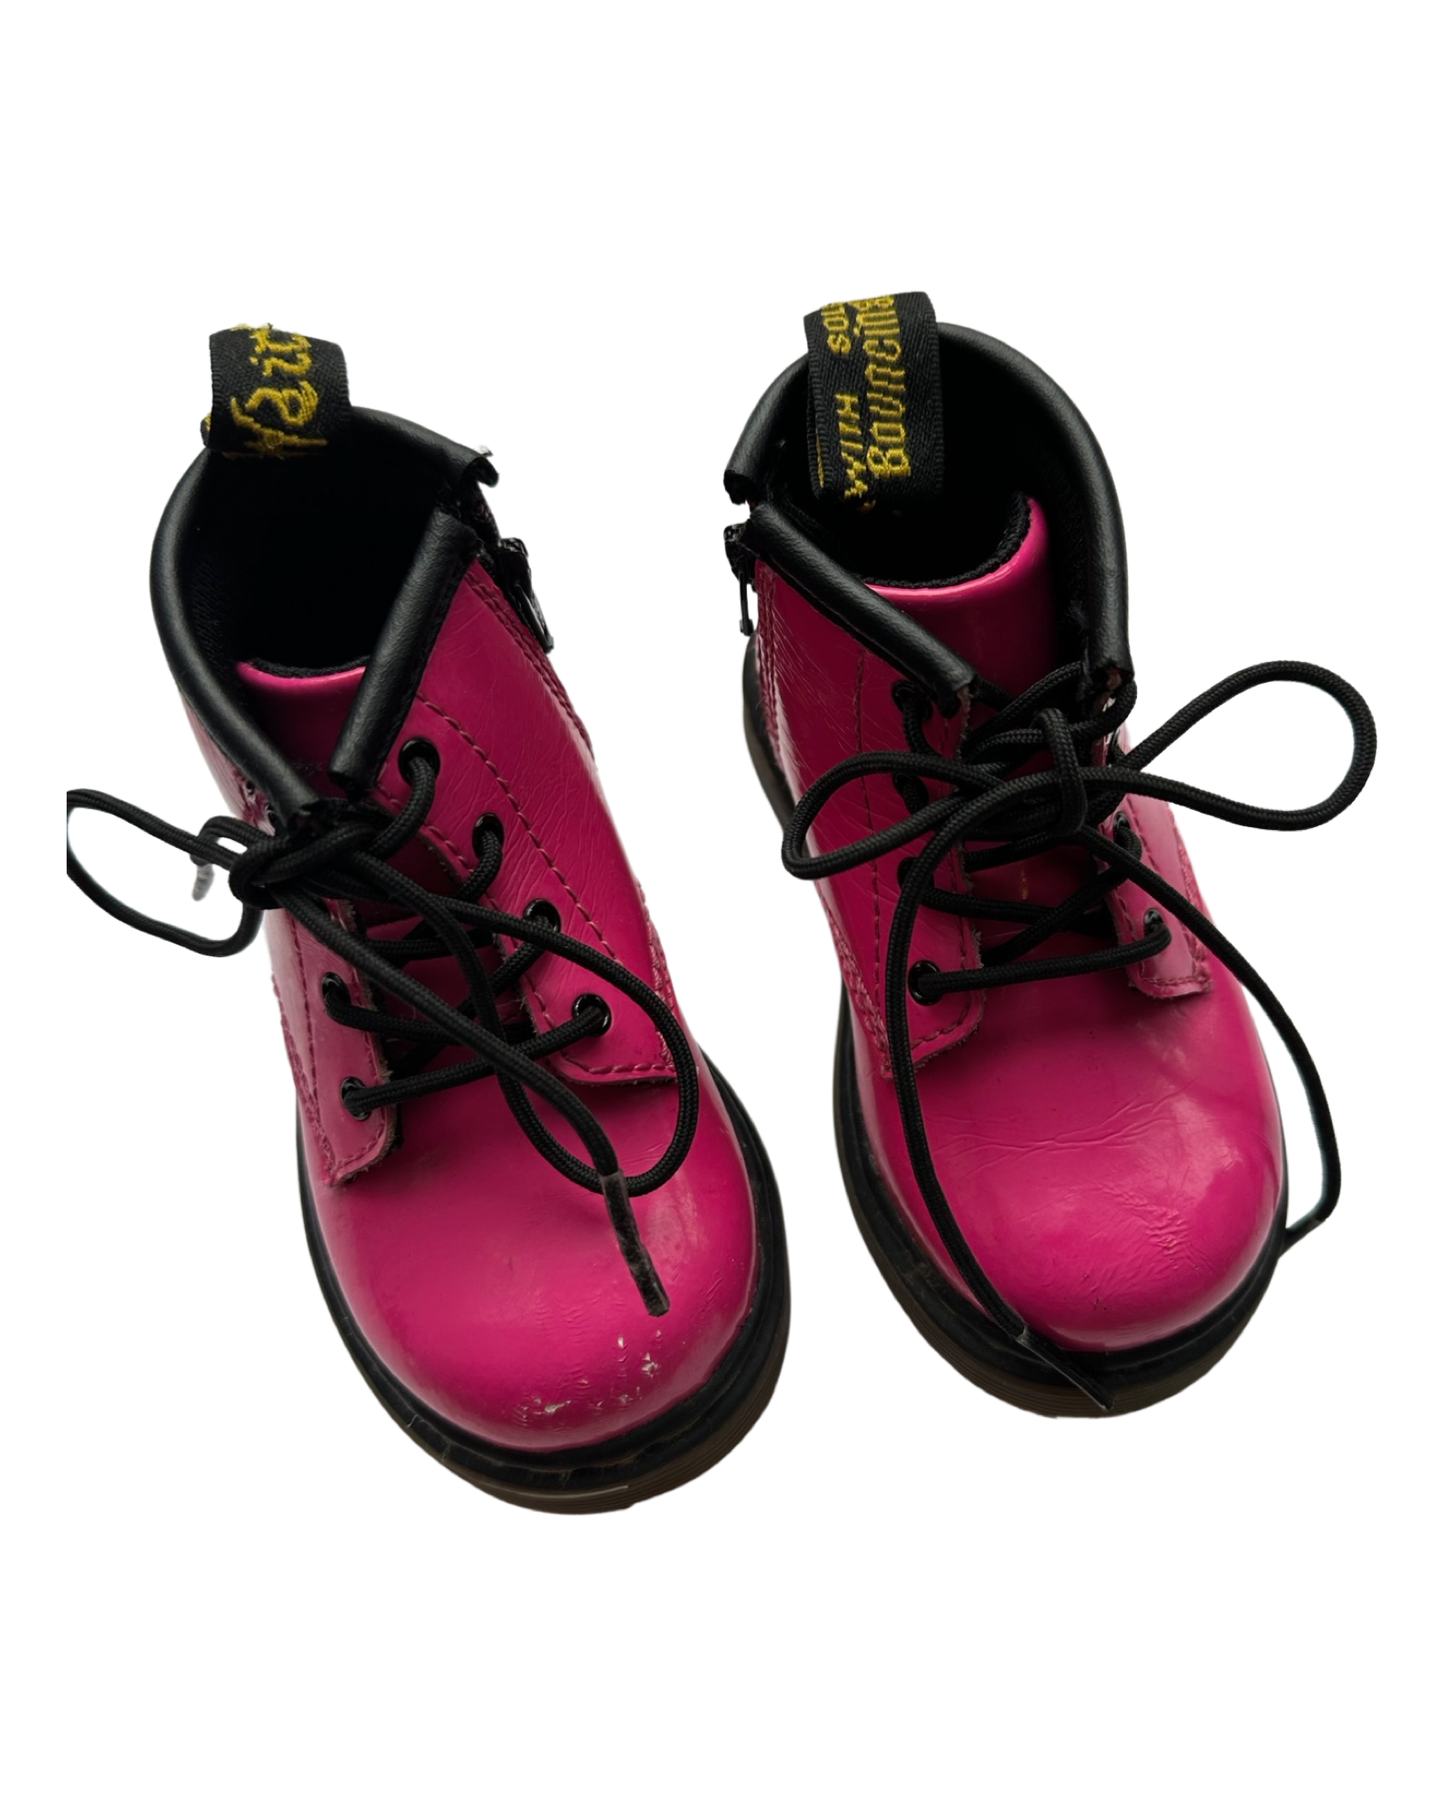 Dr Marten 1460 hot pink toddler boot (size UK4/EU21)